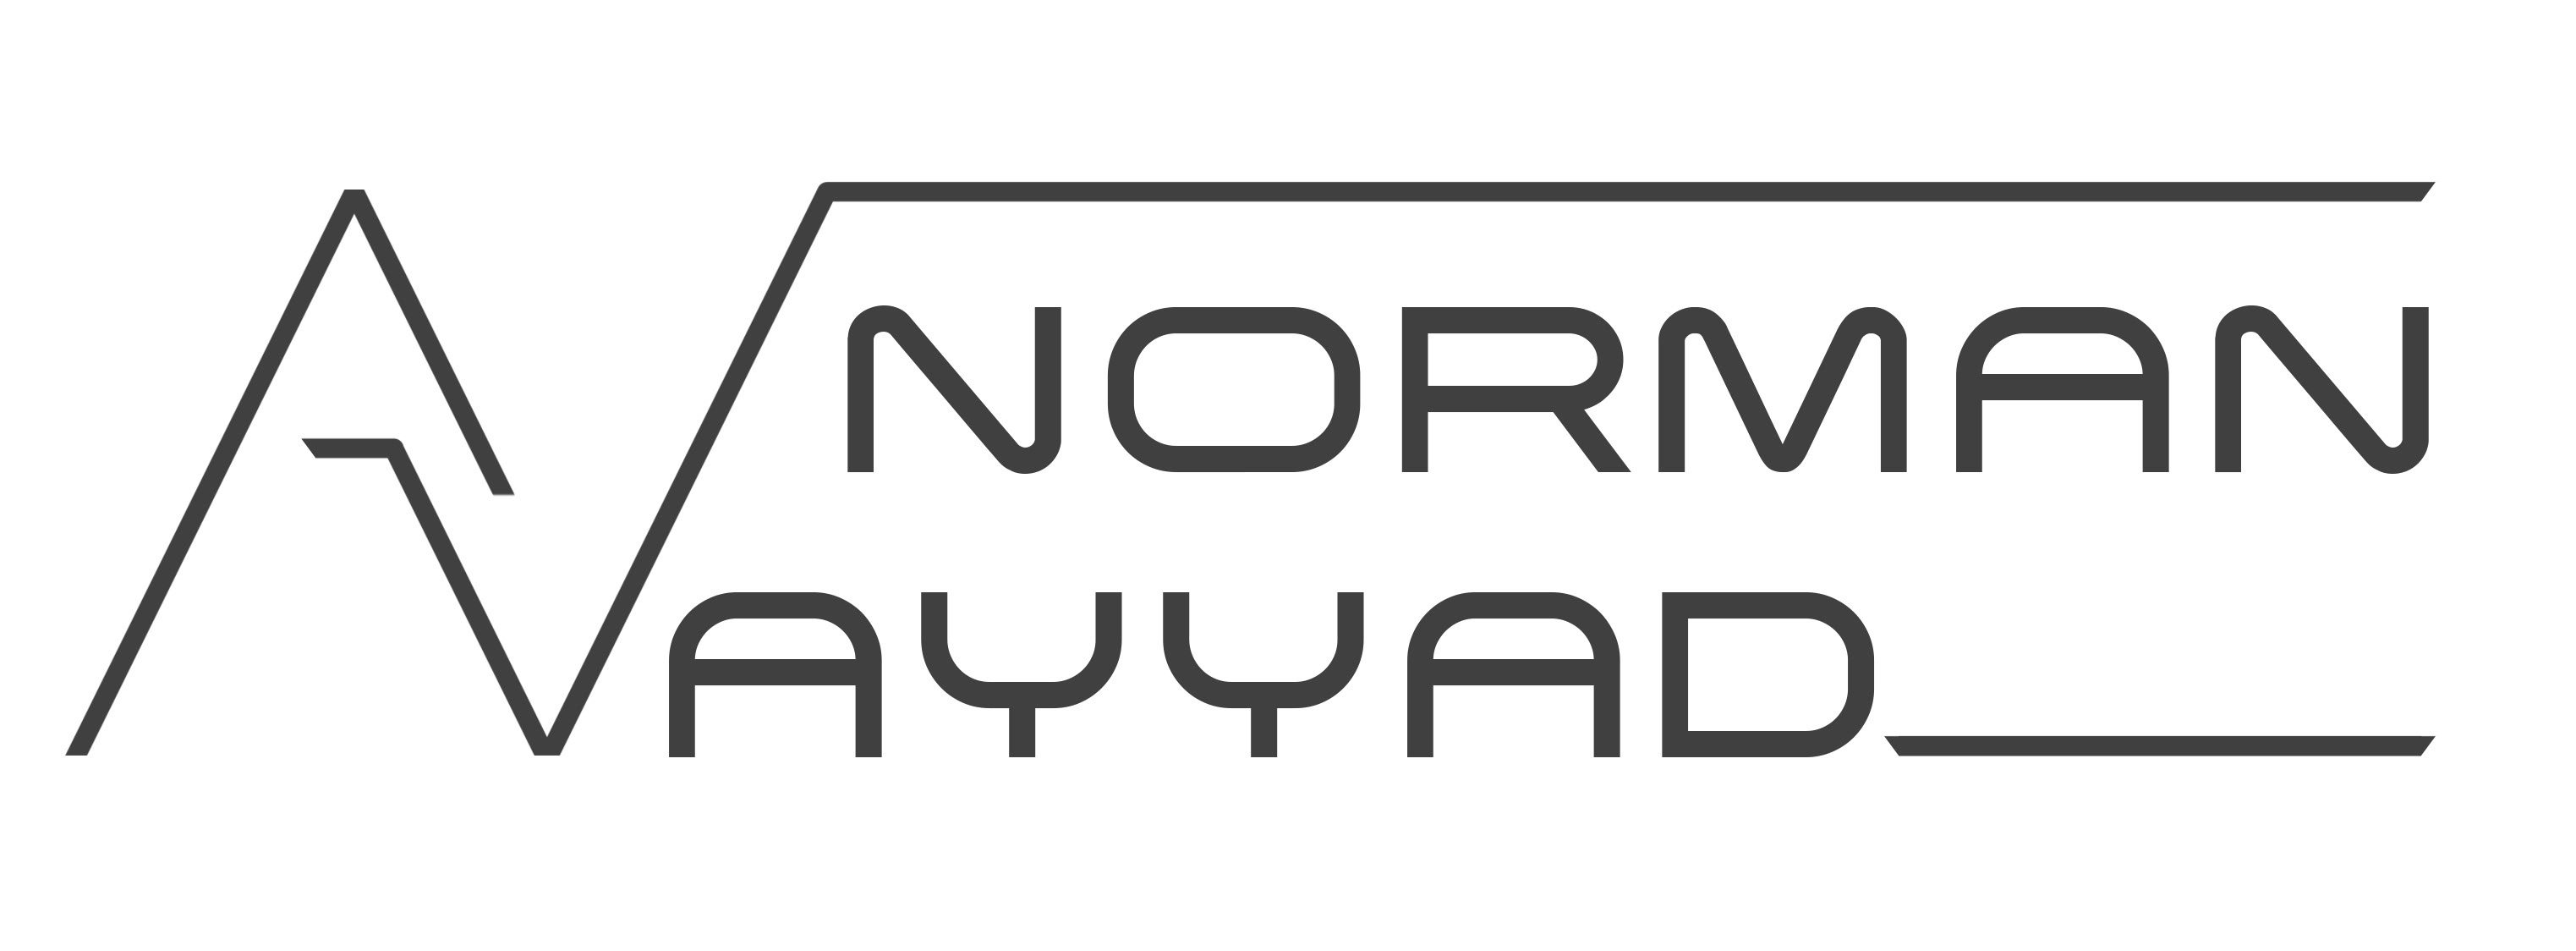 Norman Ayyad